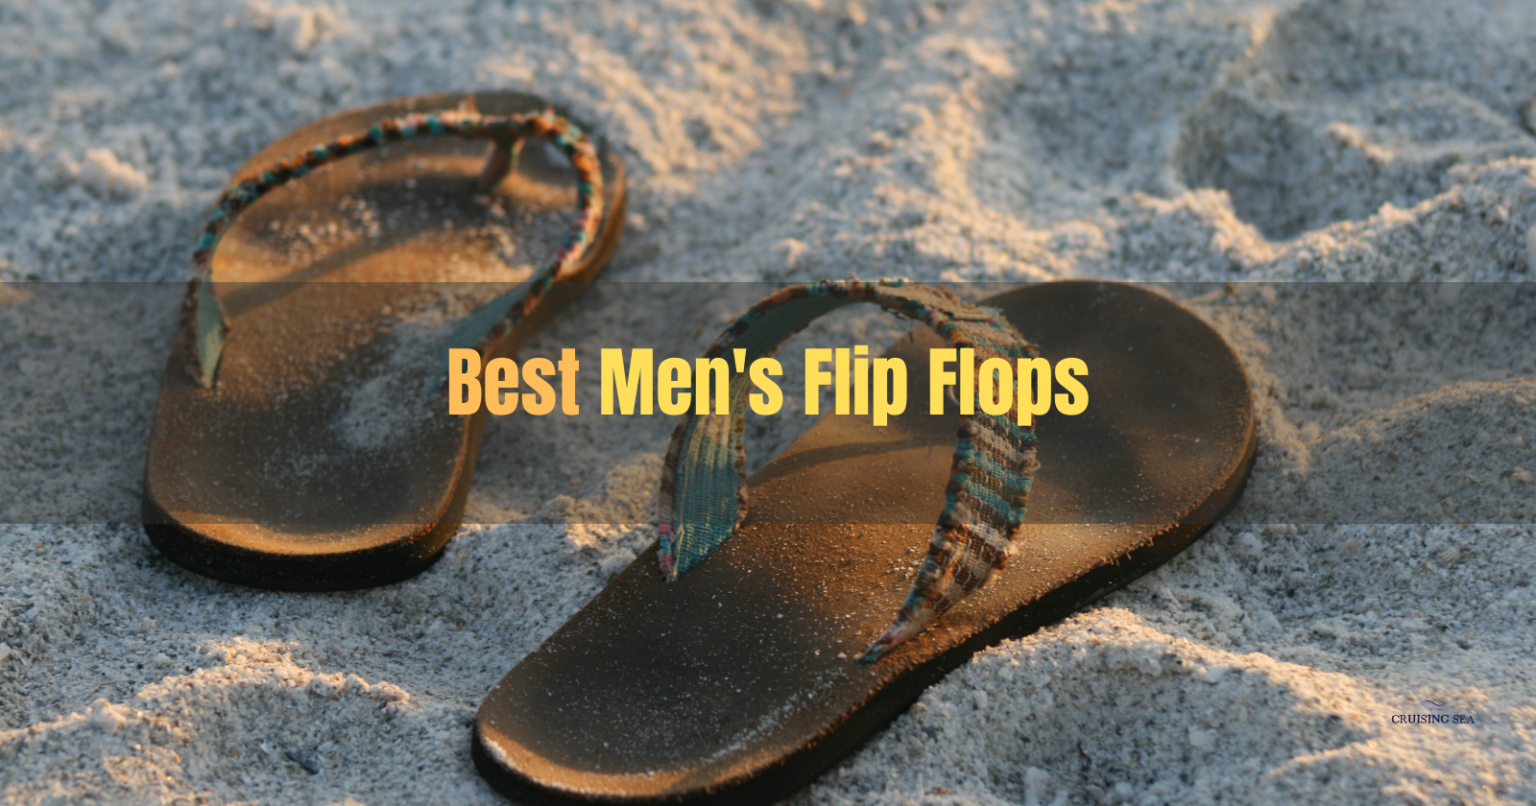 5 Best Men's Flip Flops 2022 - To Wear Anywhere!